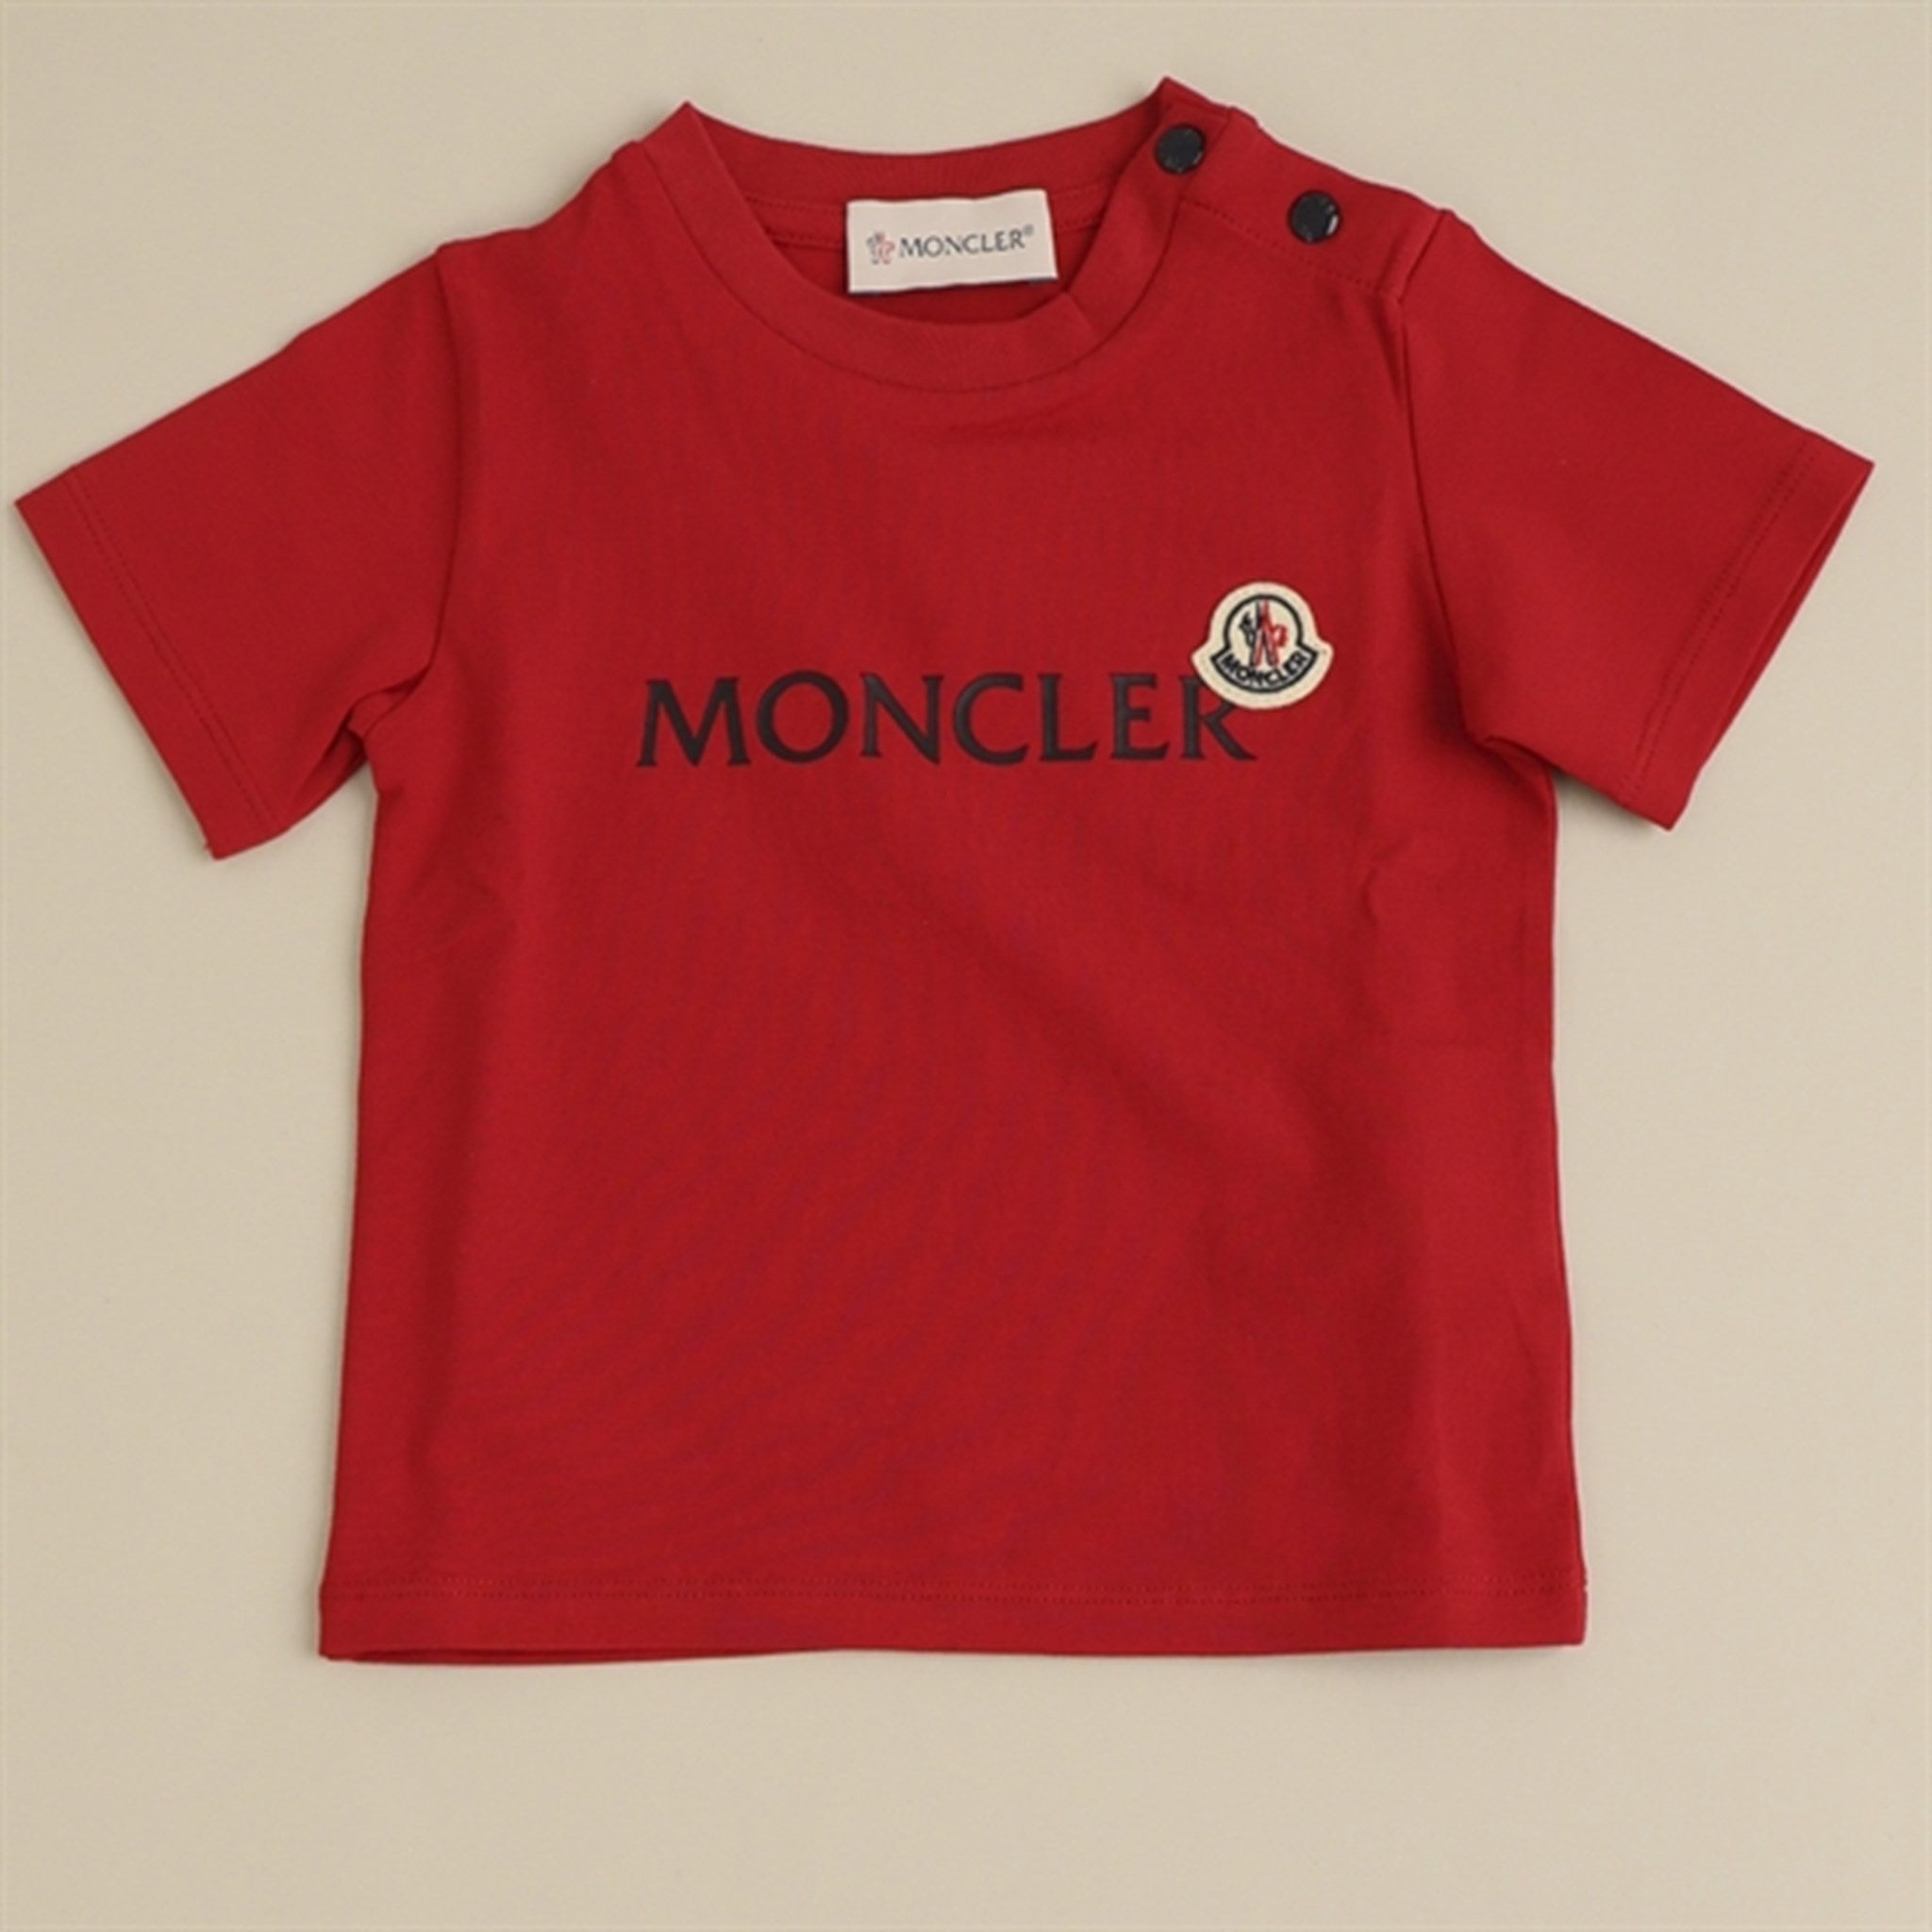 Moncler T-Shirt and Shorts Set Rose Red 2